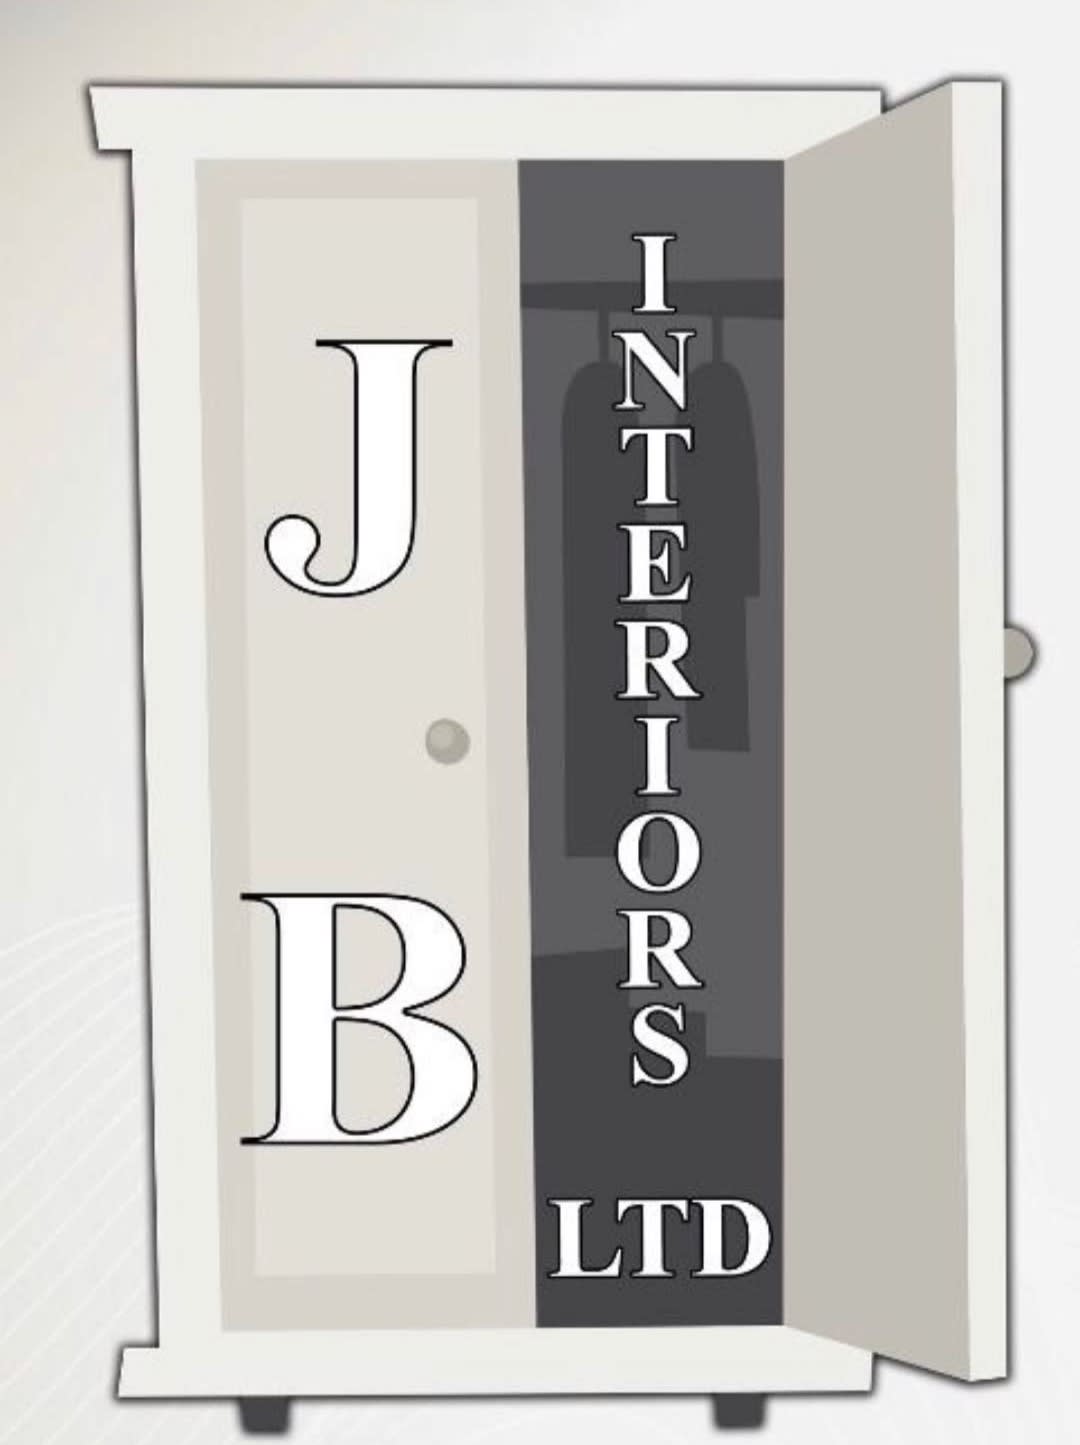 J B Bedrooms LTD